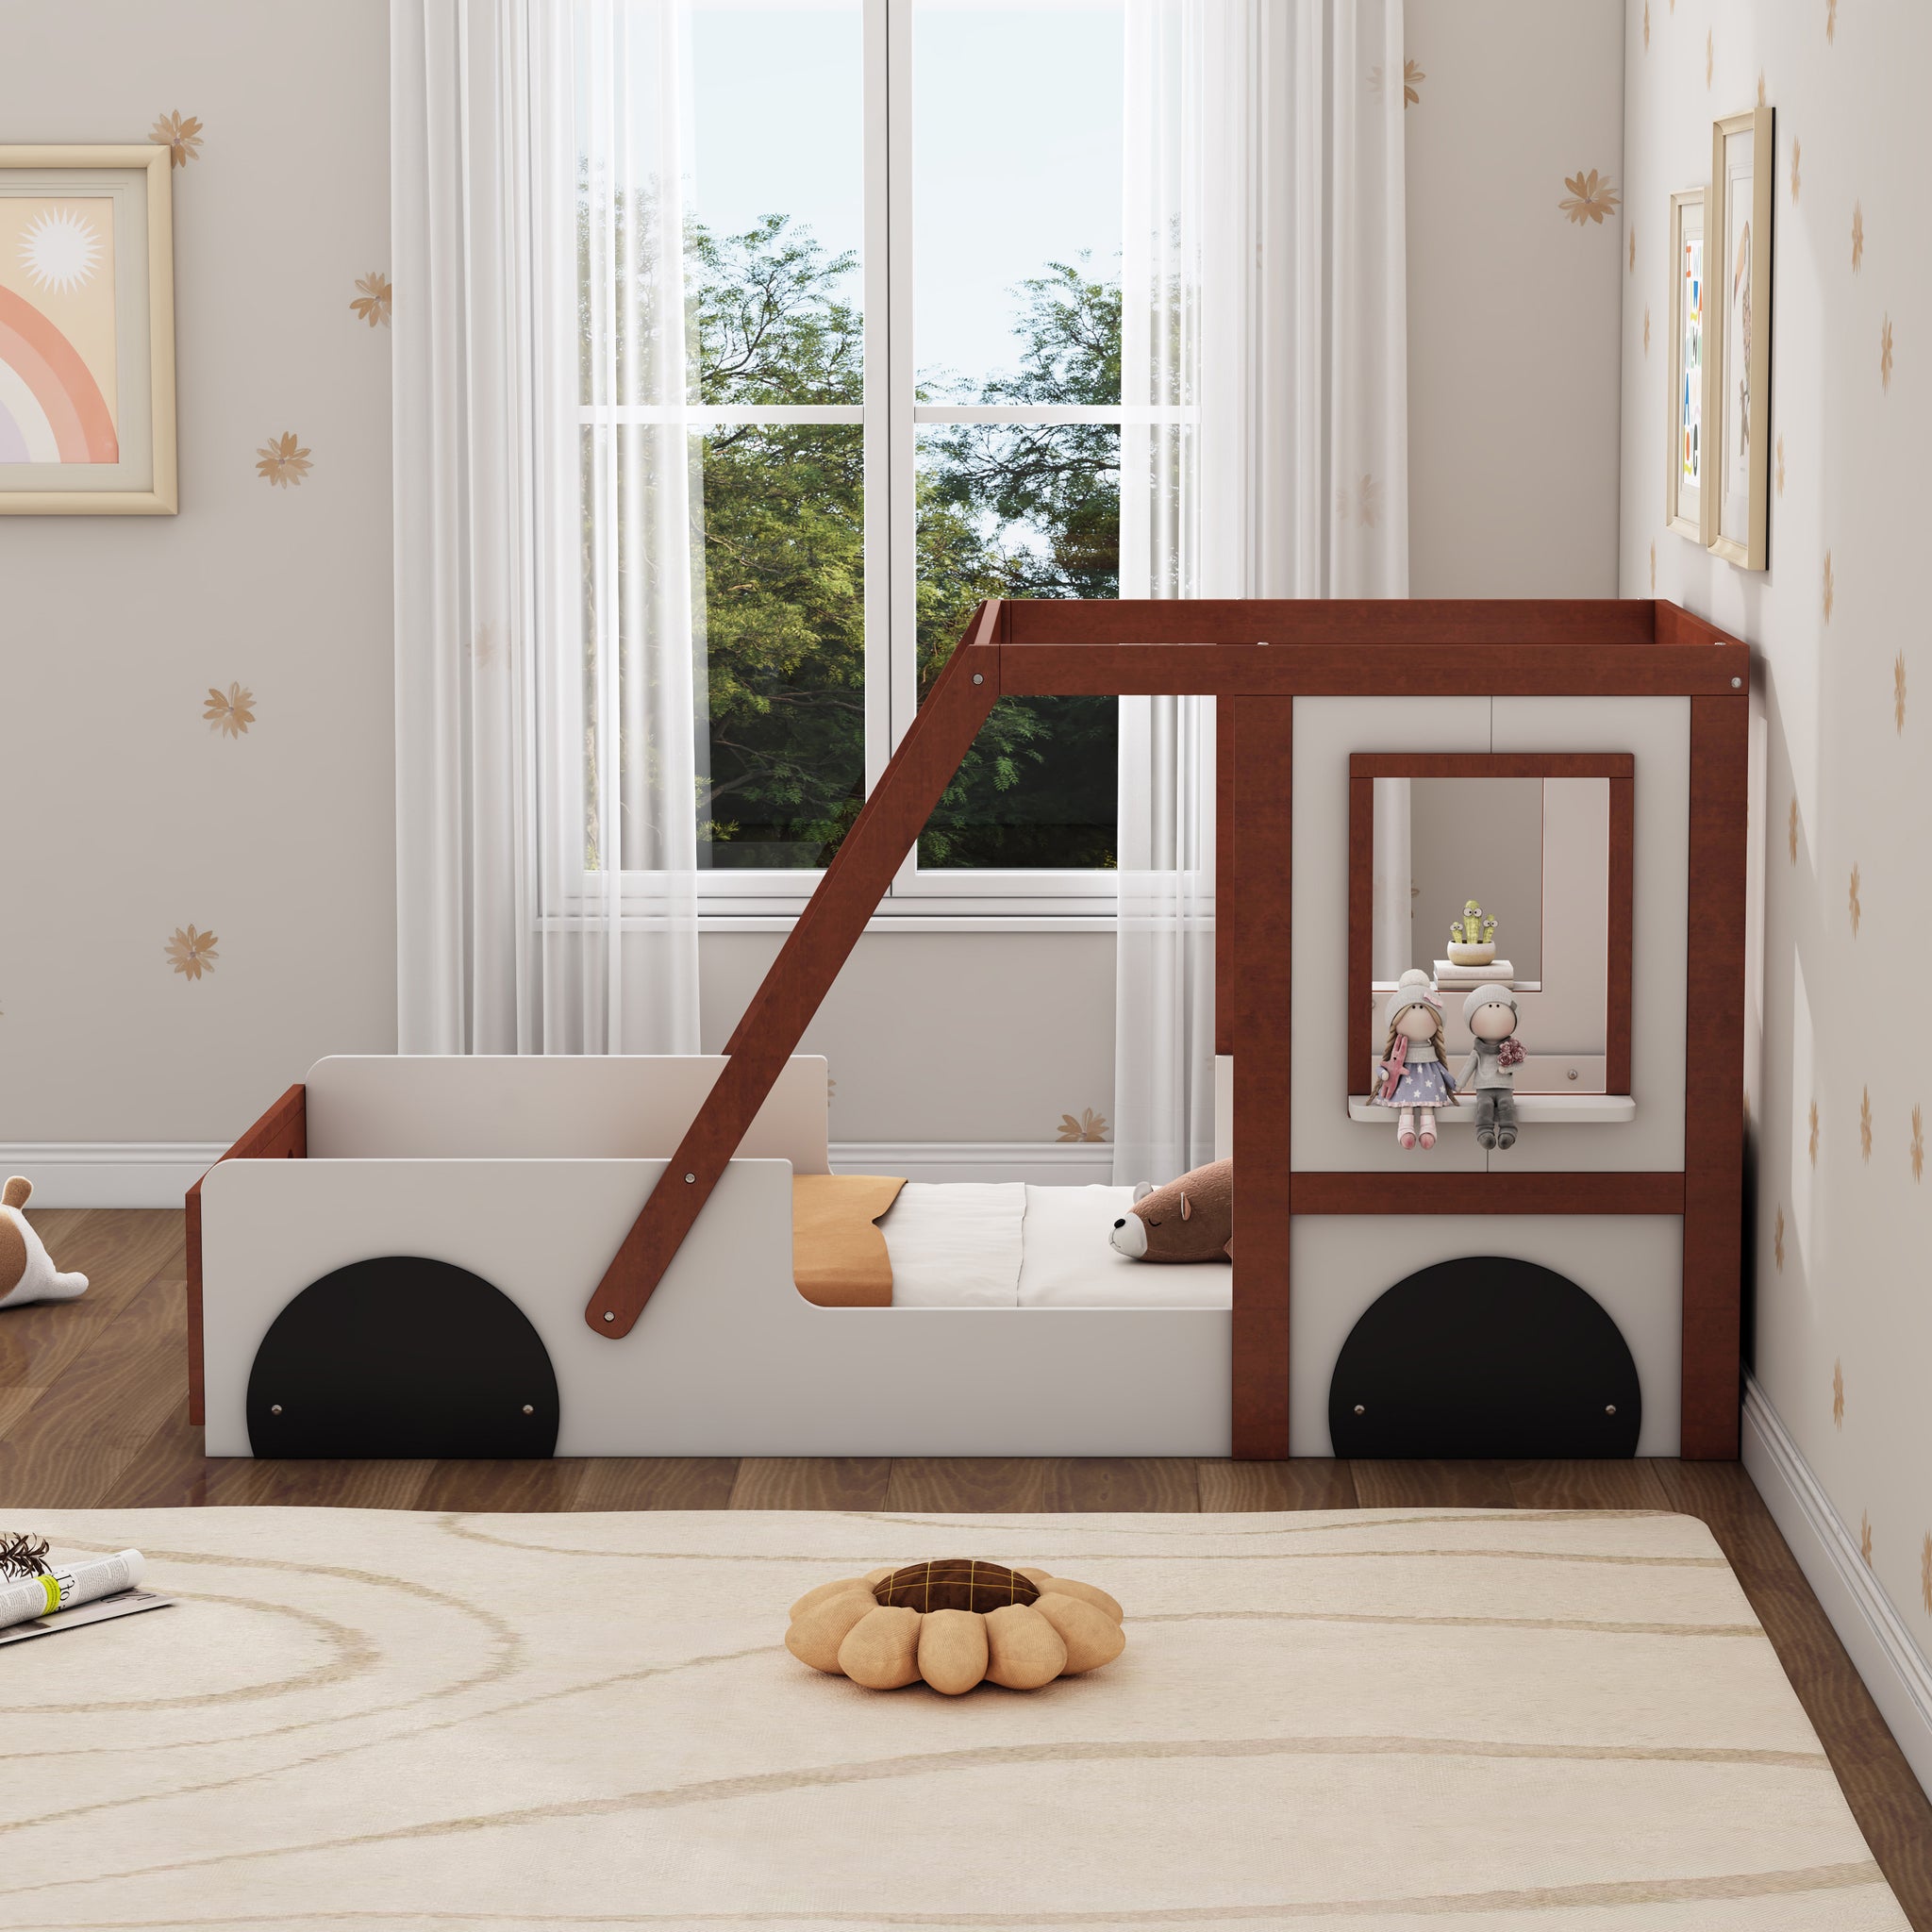 Fun Play Design Twin Size Car Bed, Kids Platform Bed orange-solid wood+mdf